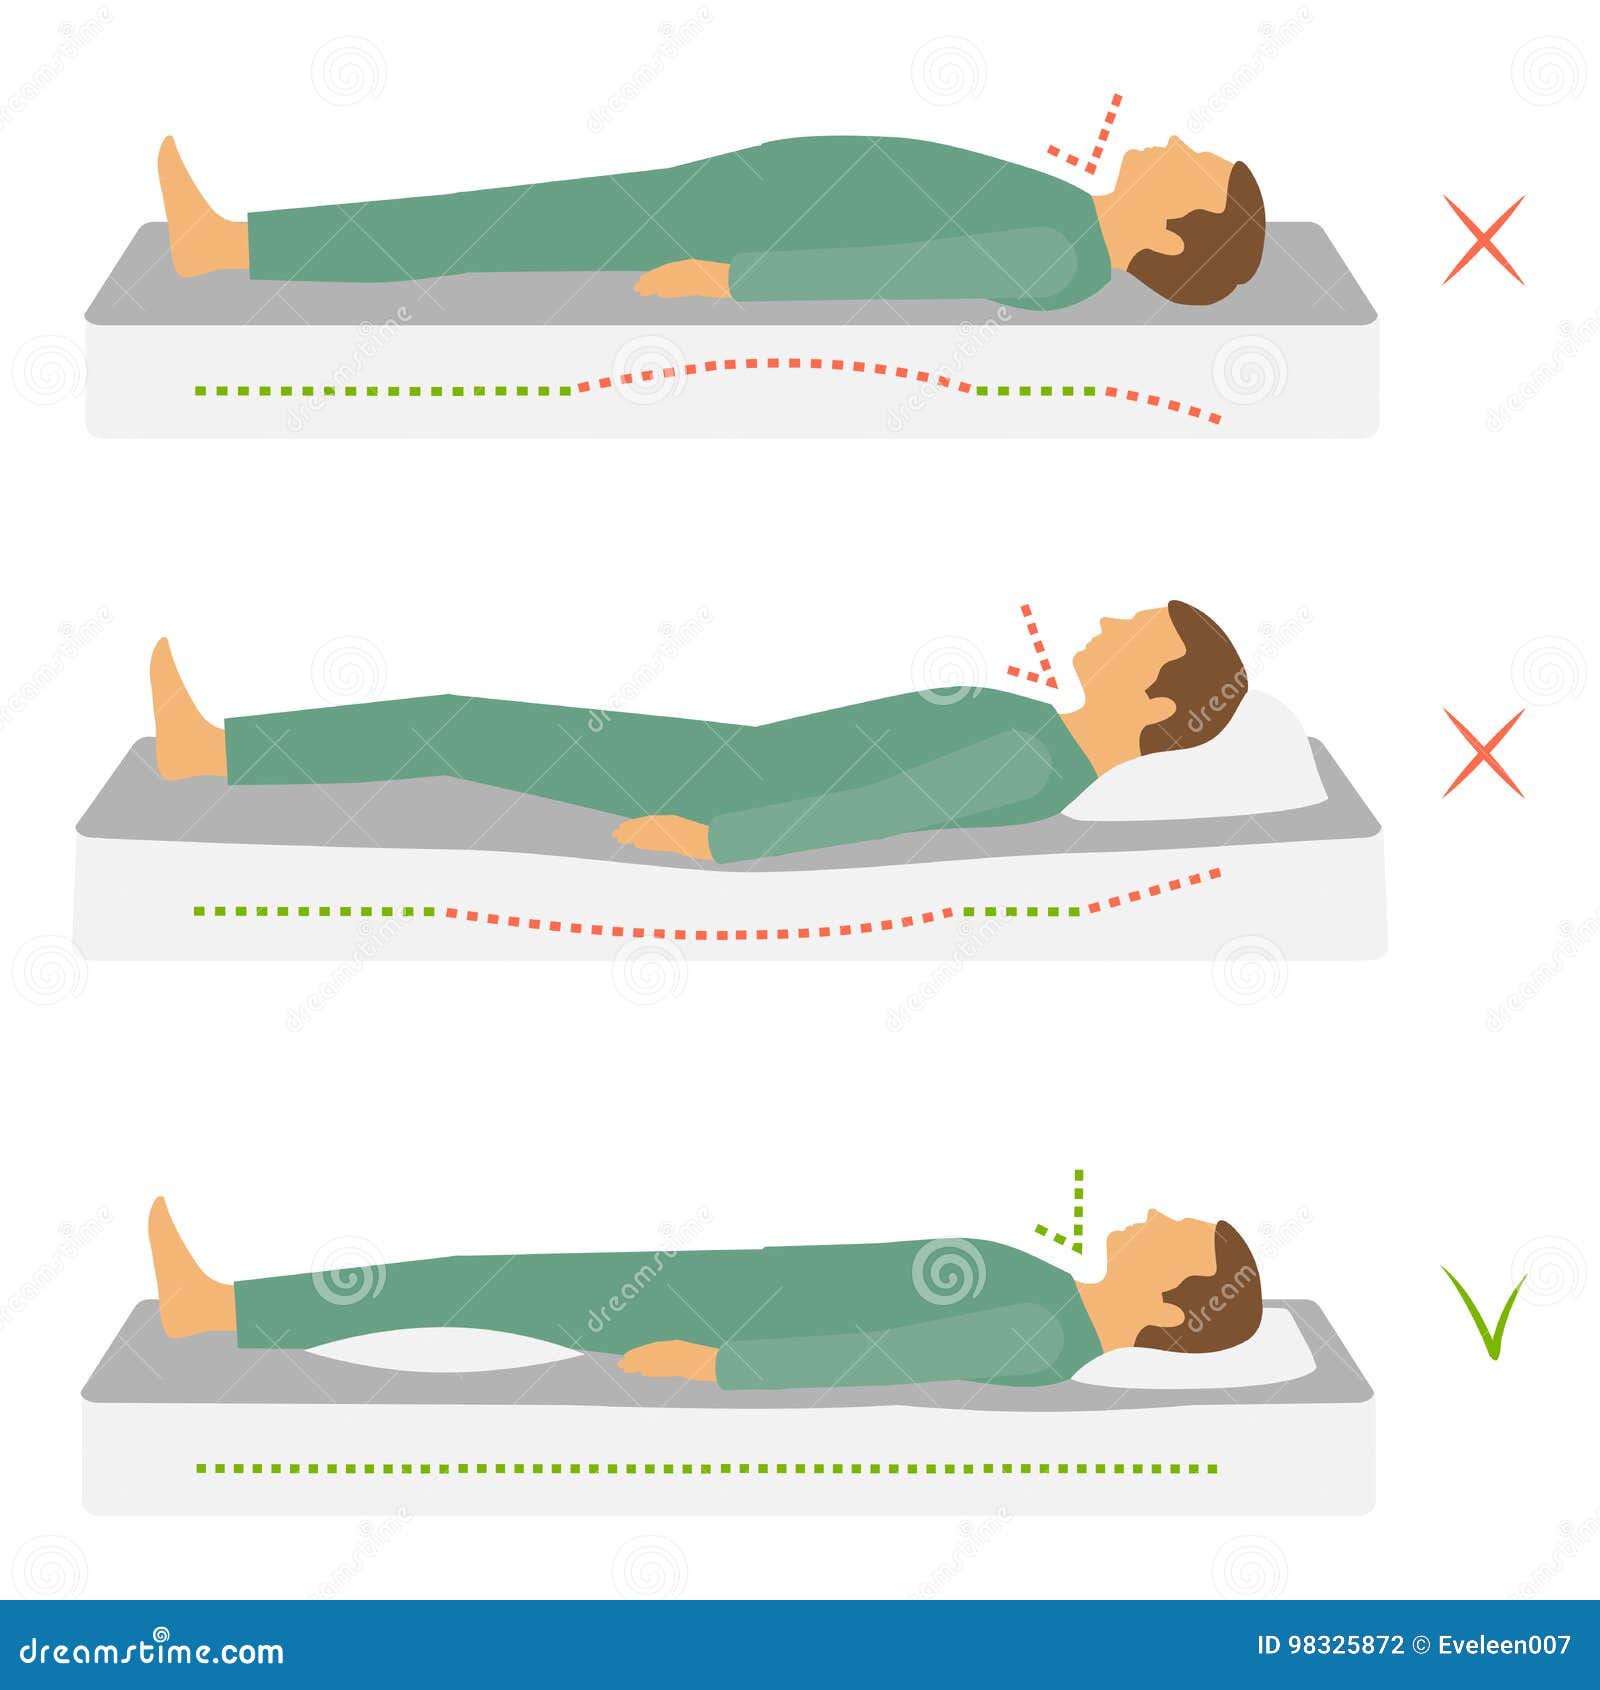 sleeping correct health body position